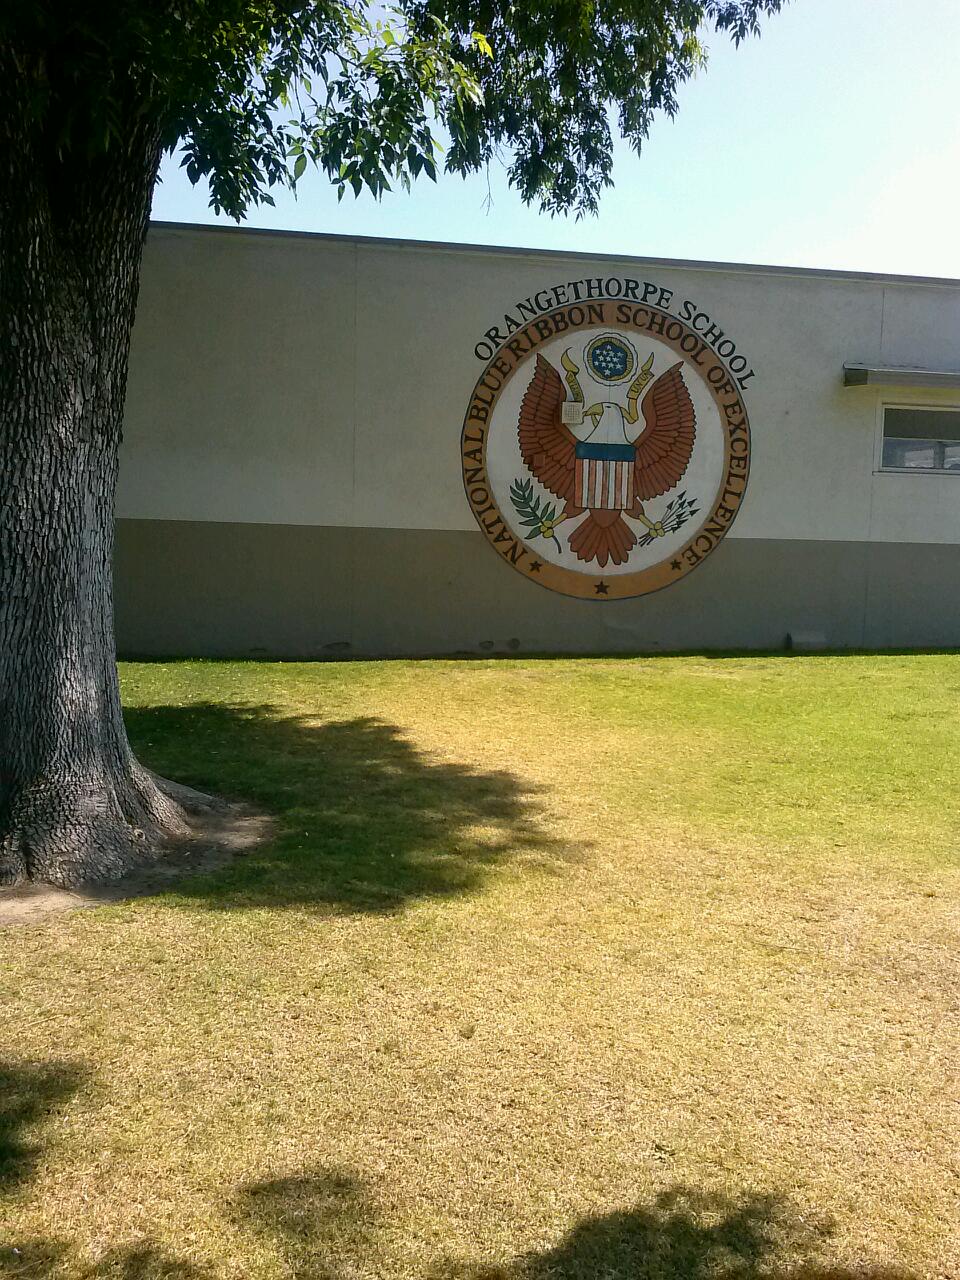 Orangethorpe Elementary School